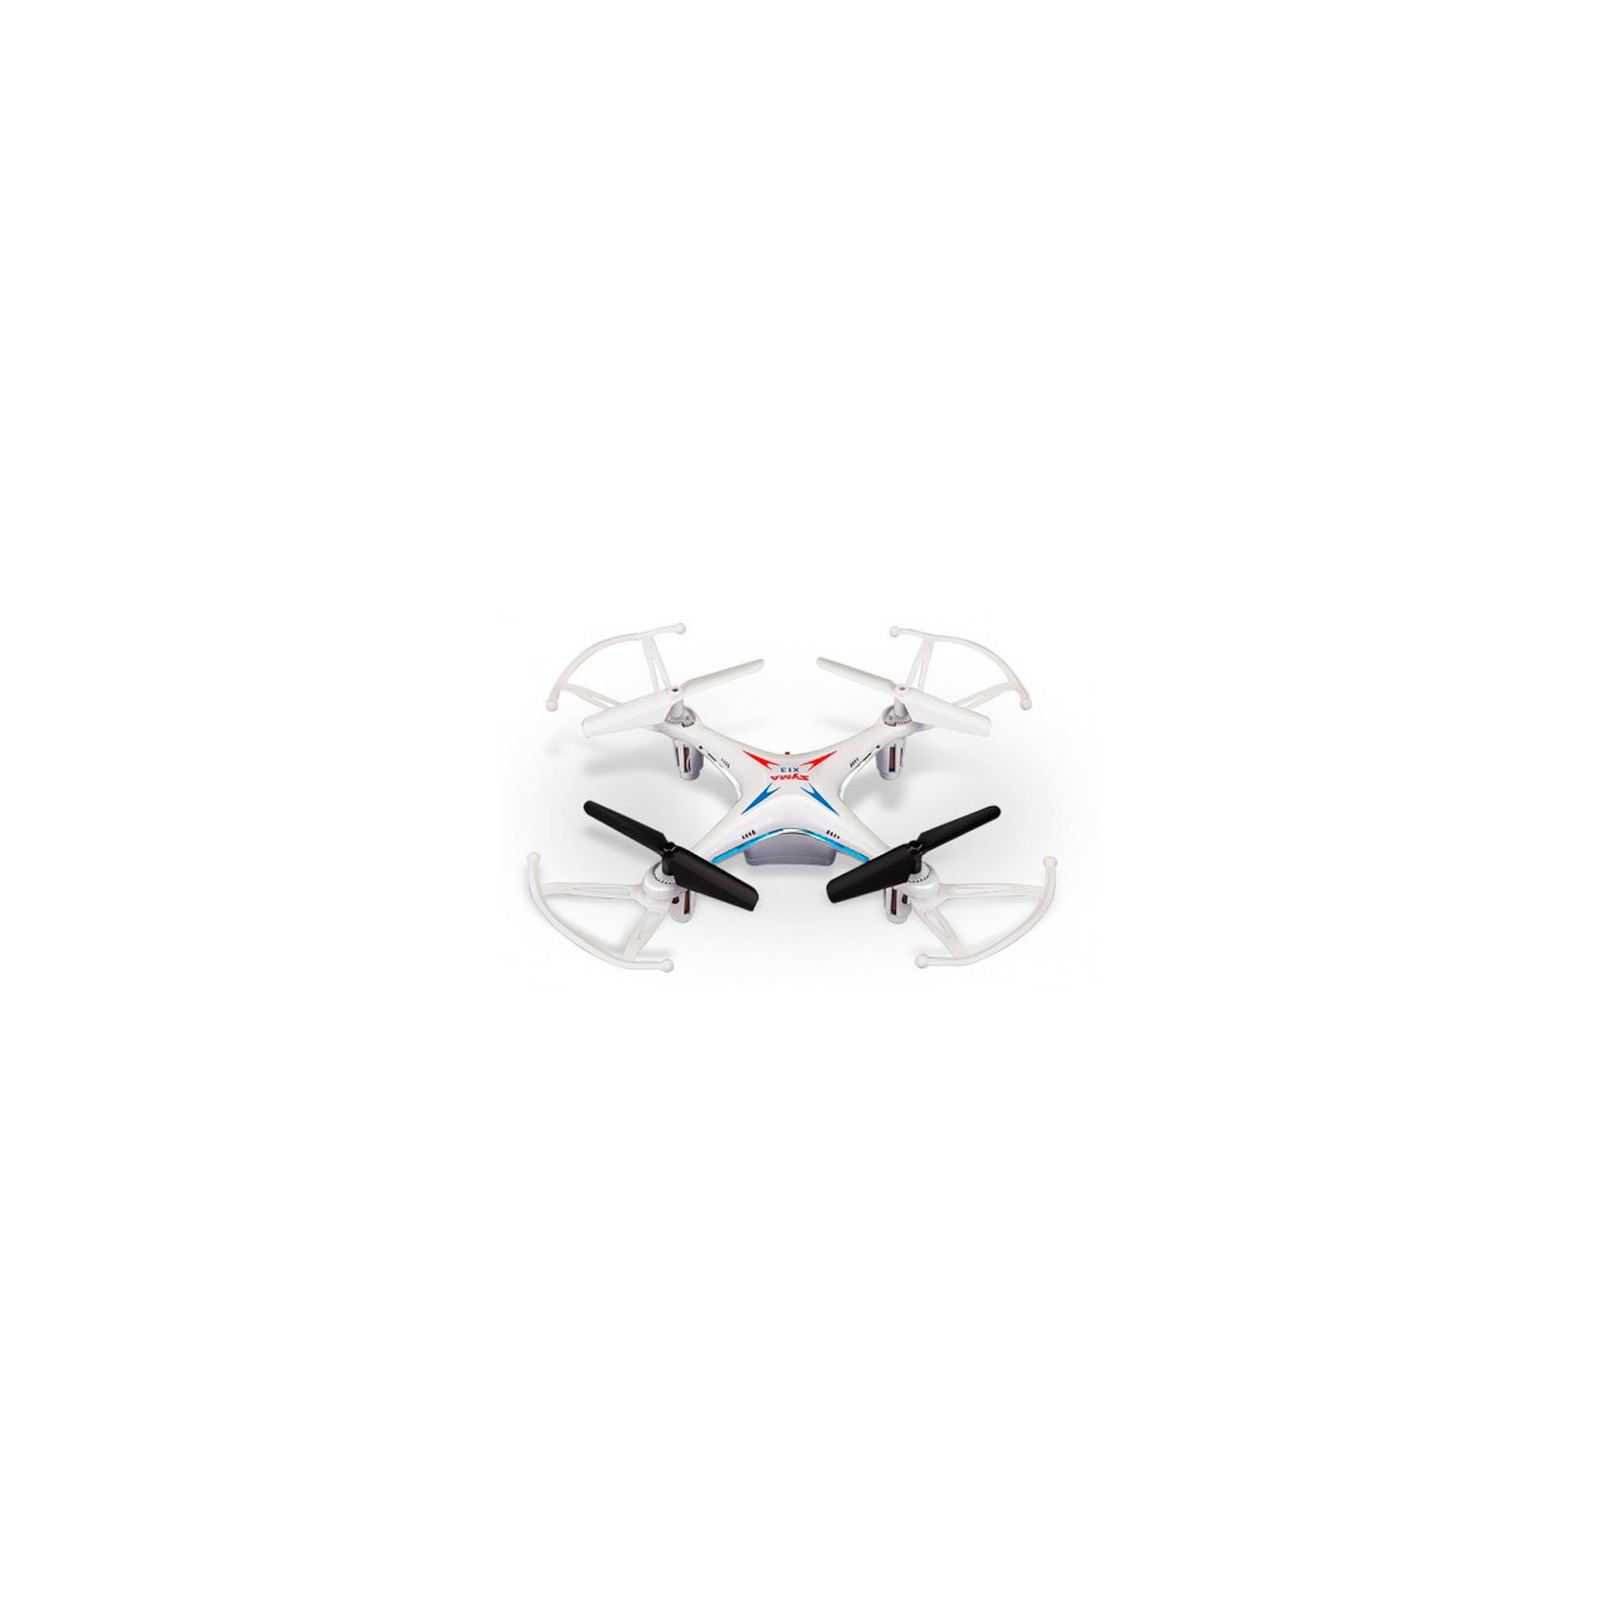 Квадрокоптер Syma X13 Storm white (45101) изображение 2